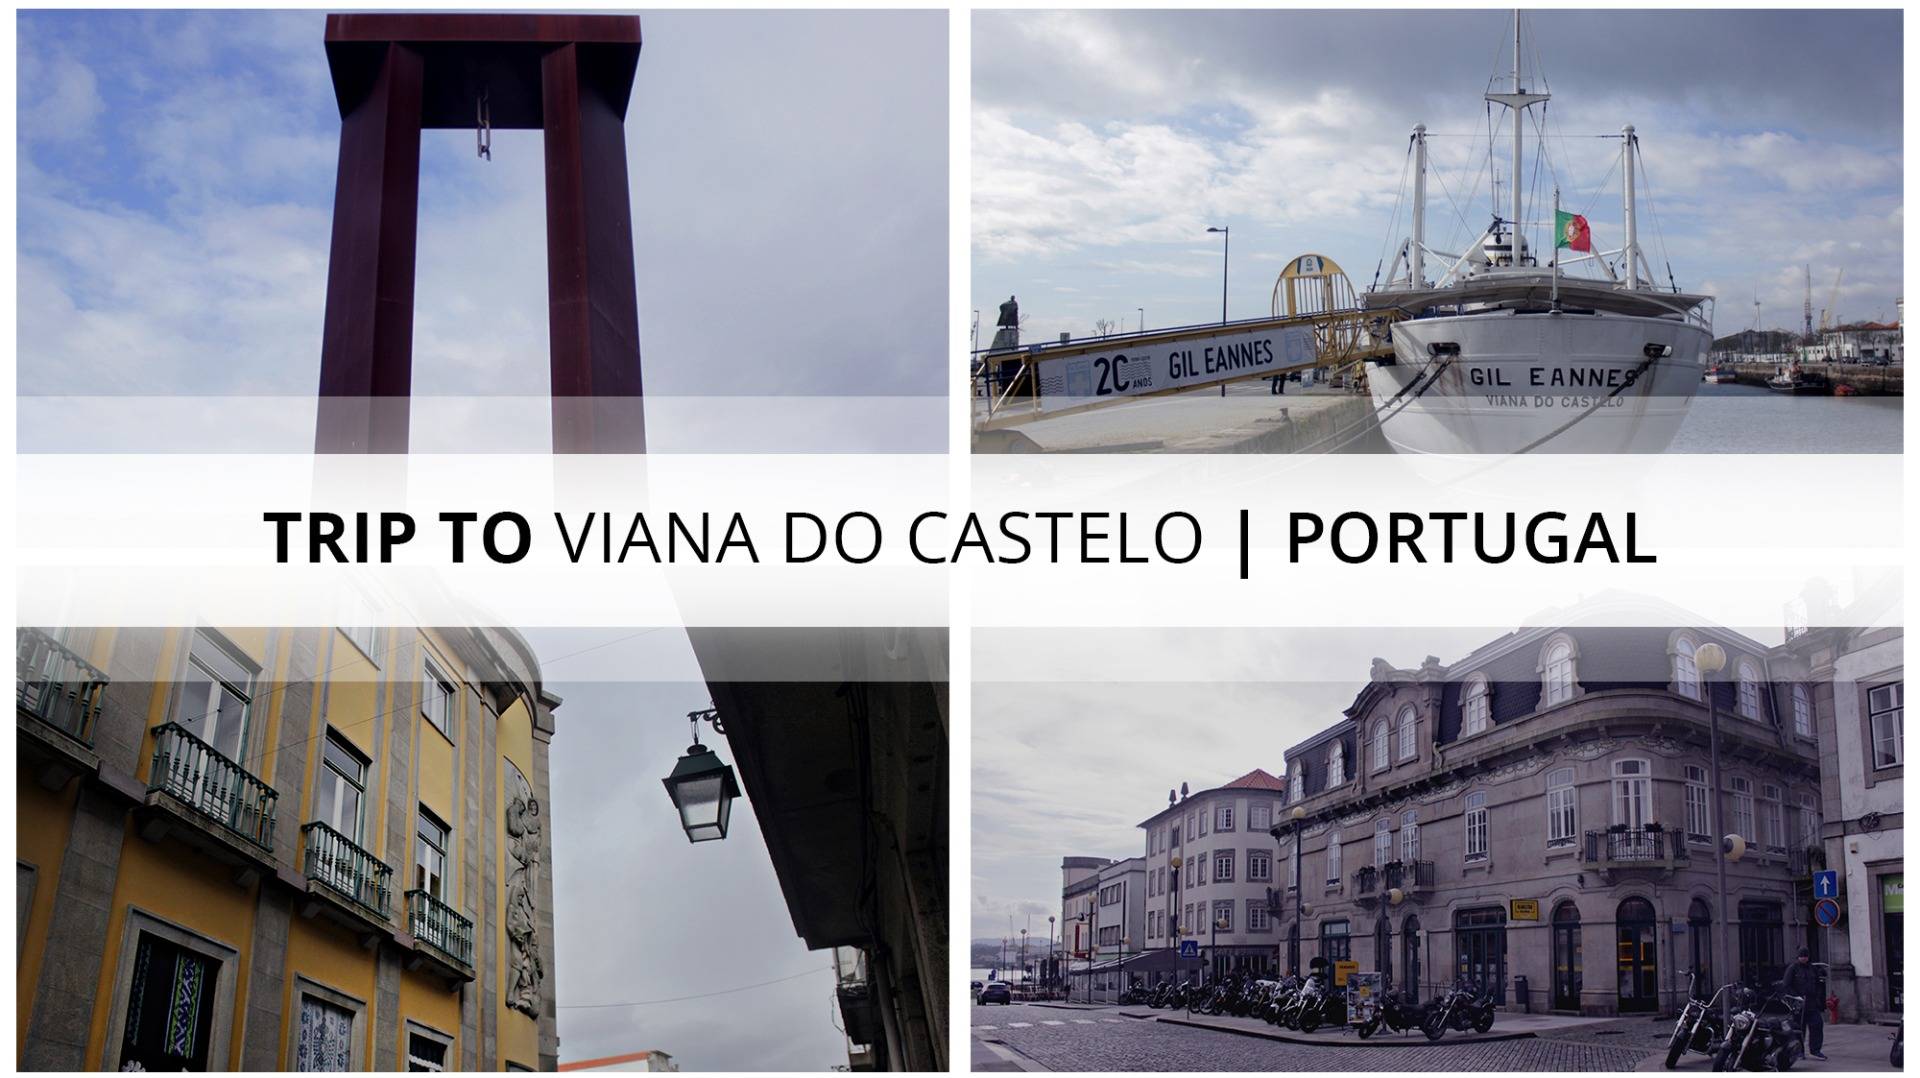 Trip to Viana do Castelo | Portugal